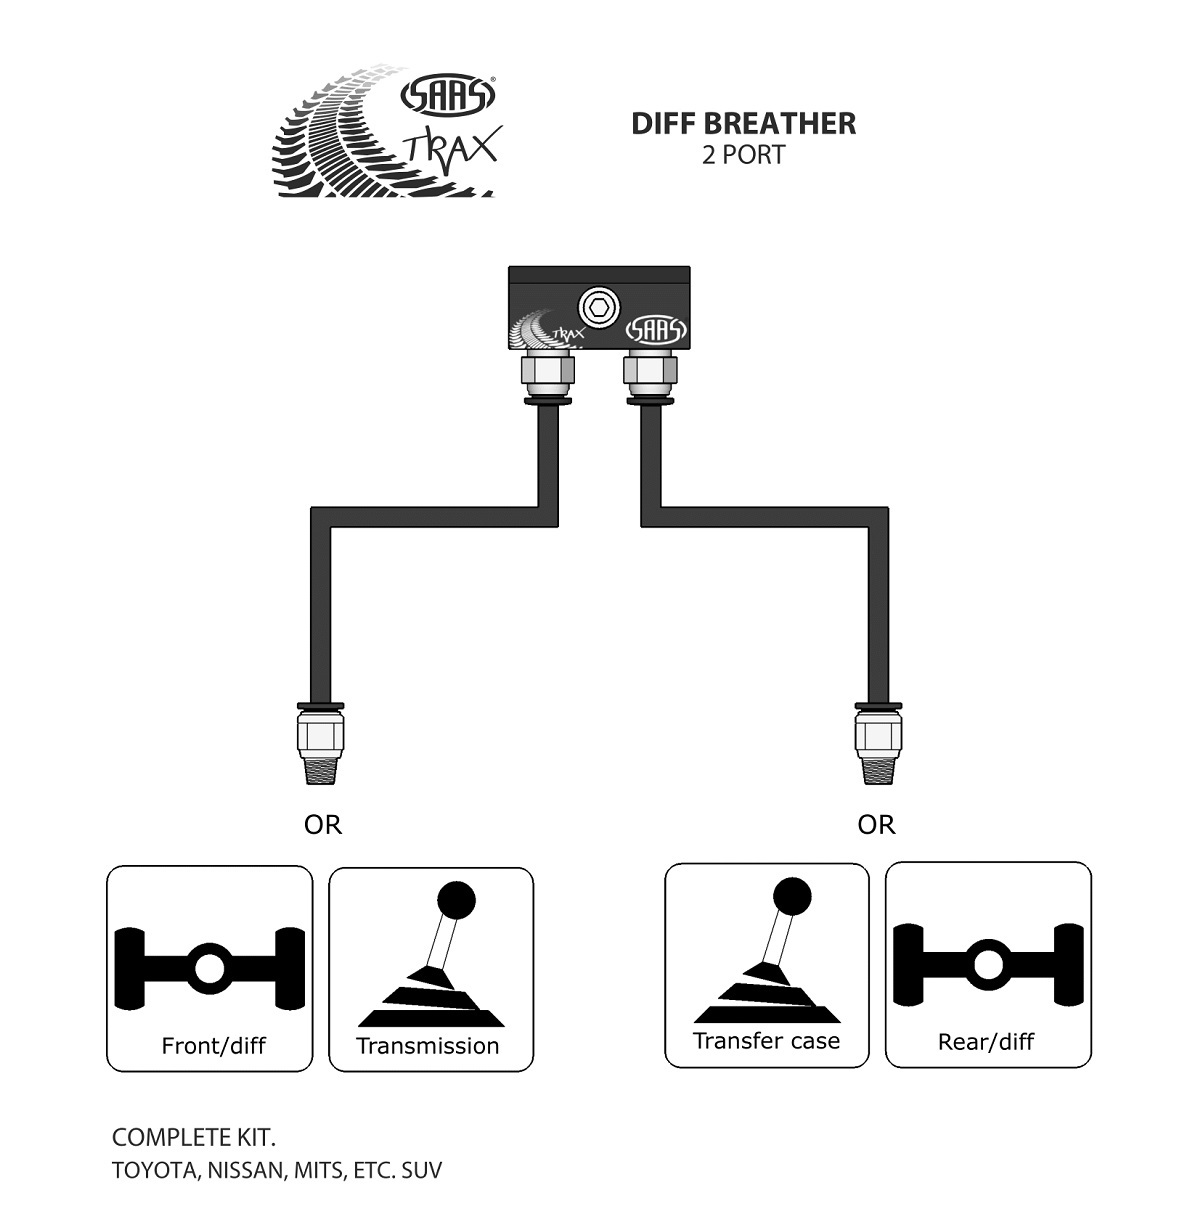 Diff Breather Kit 2 Port suit NISSAN PATROL GU Y61 1997-2015